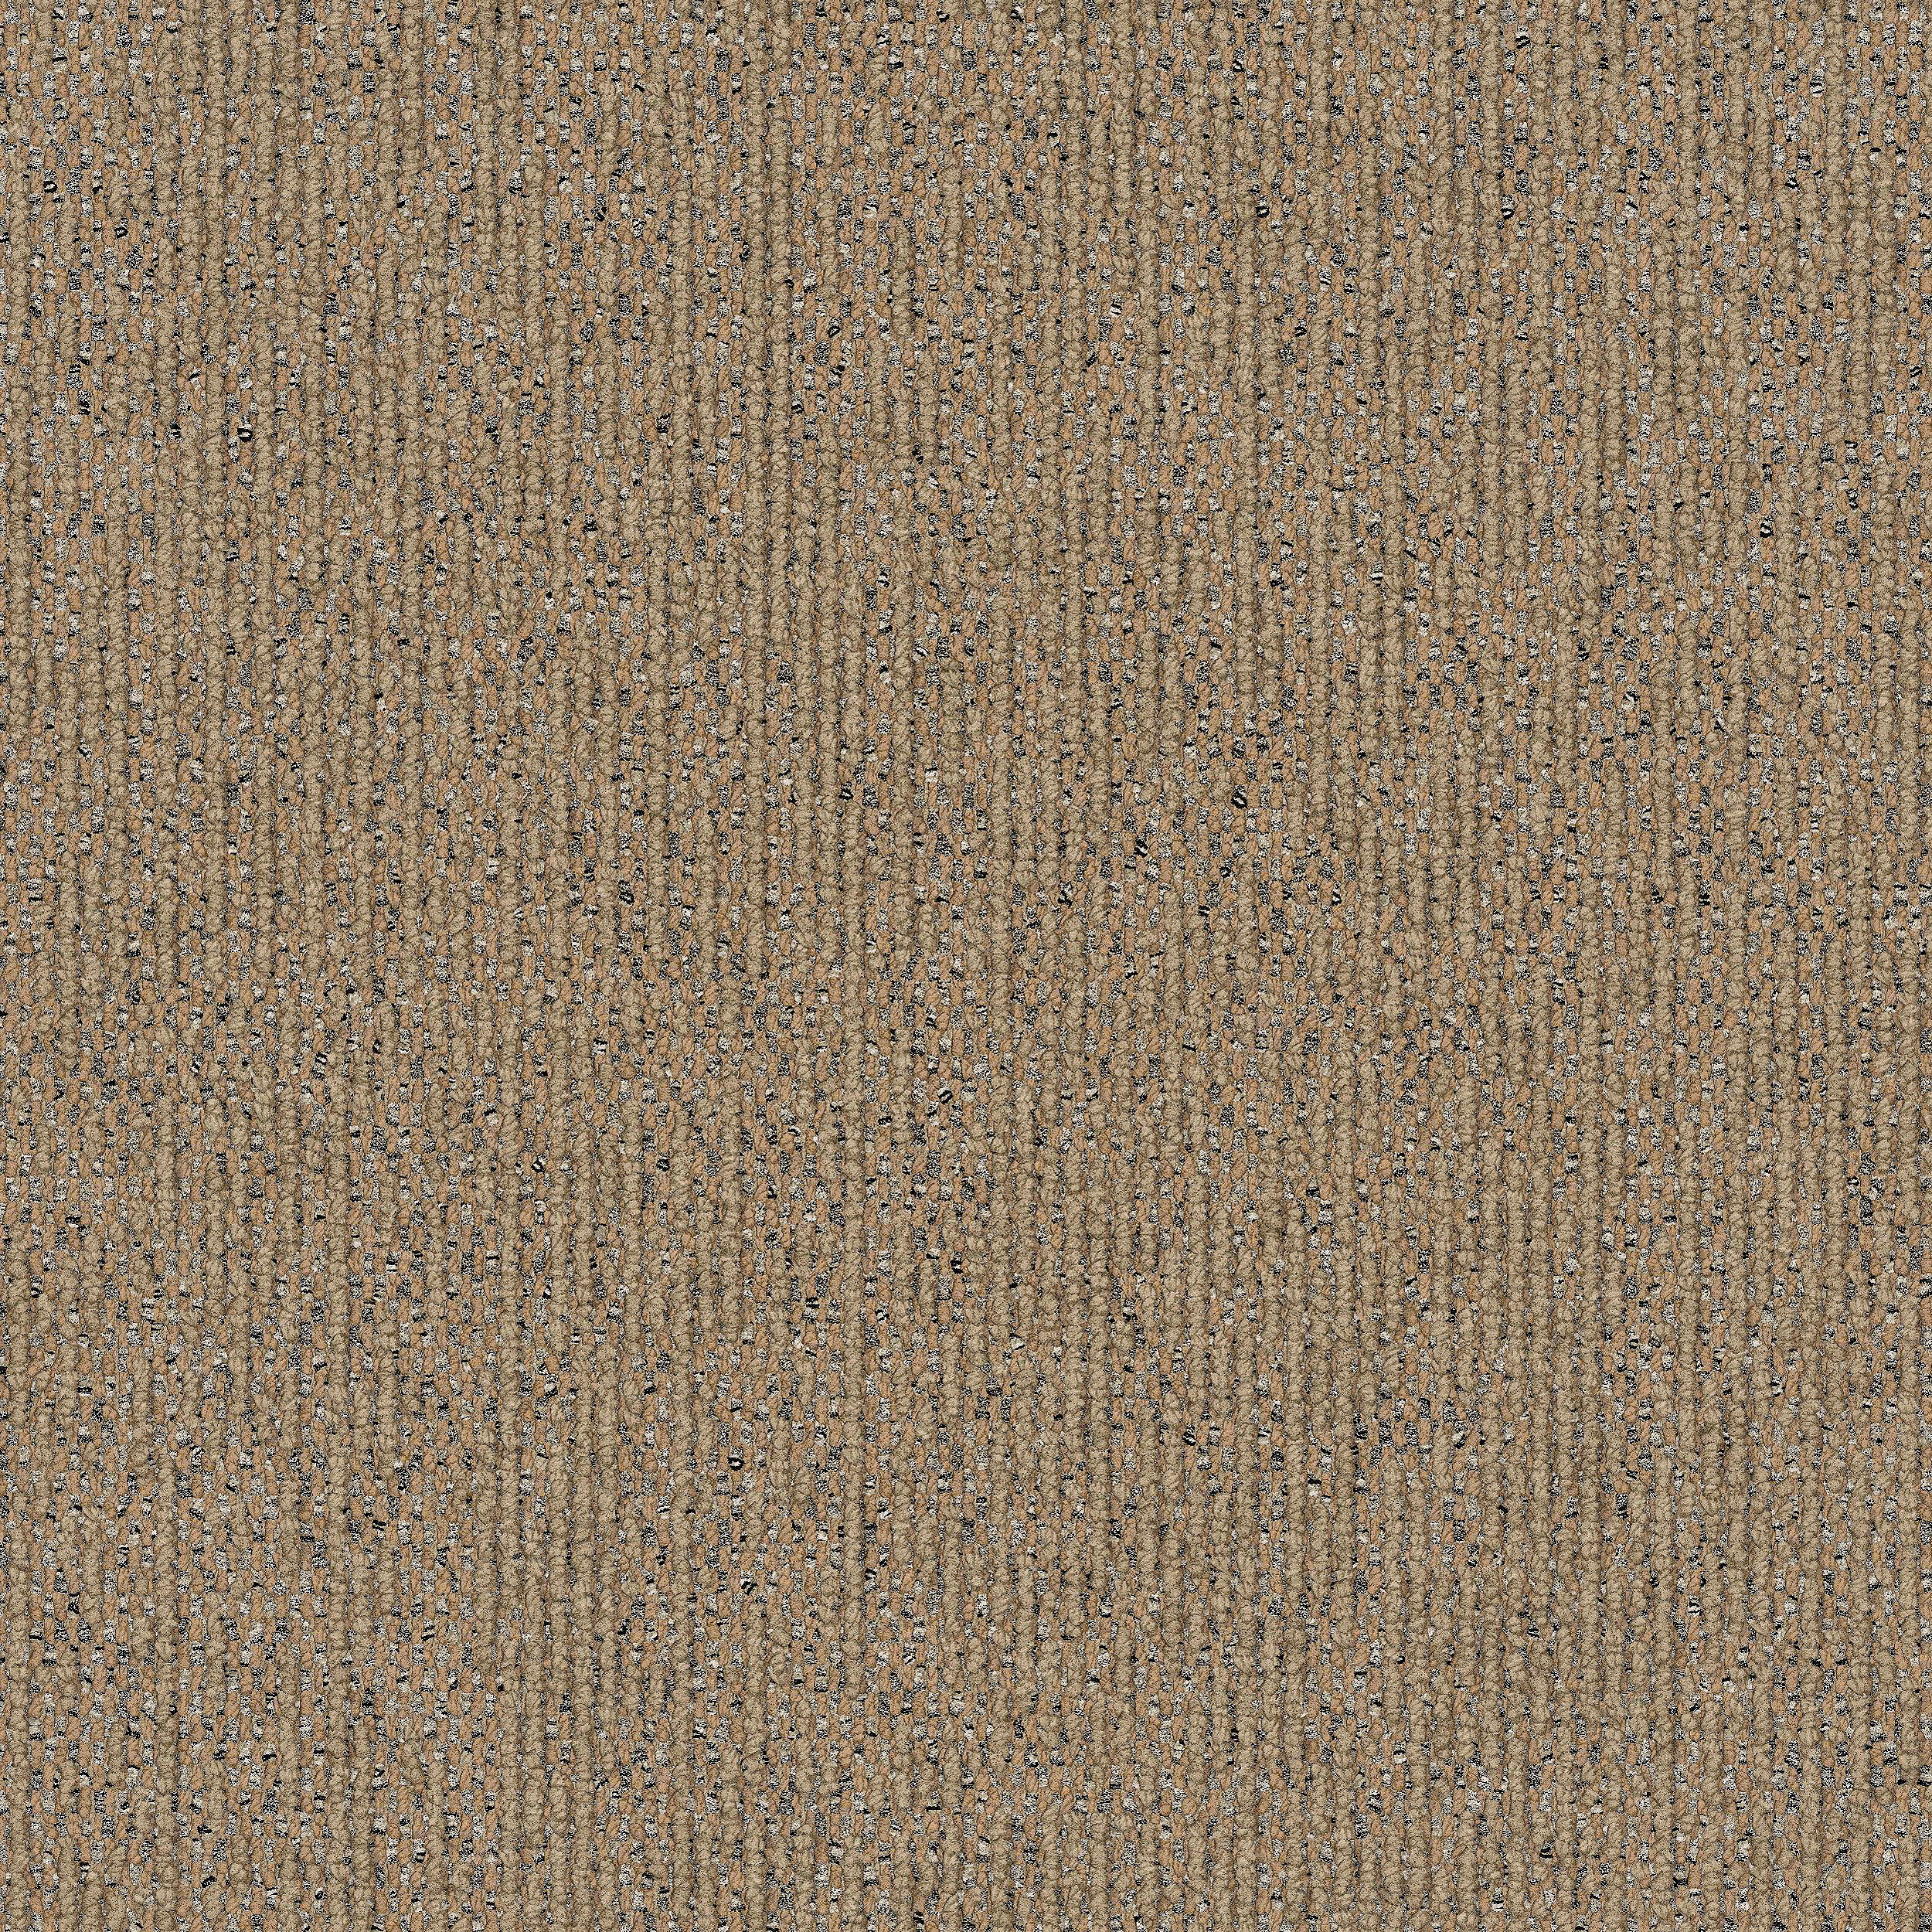 HeatherMix Carpet Tile in Straw imagen número 2